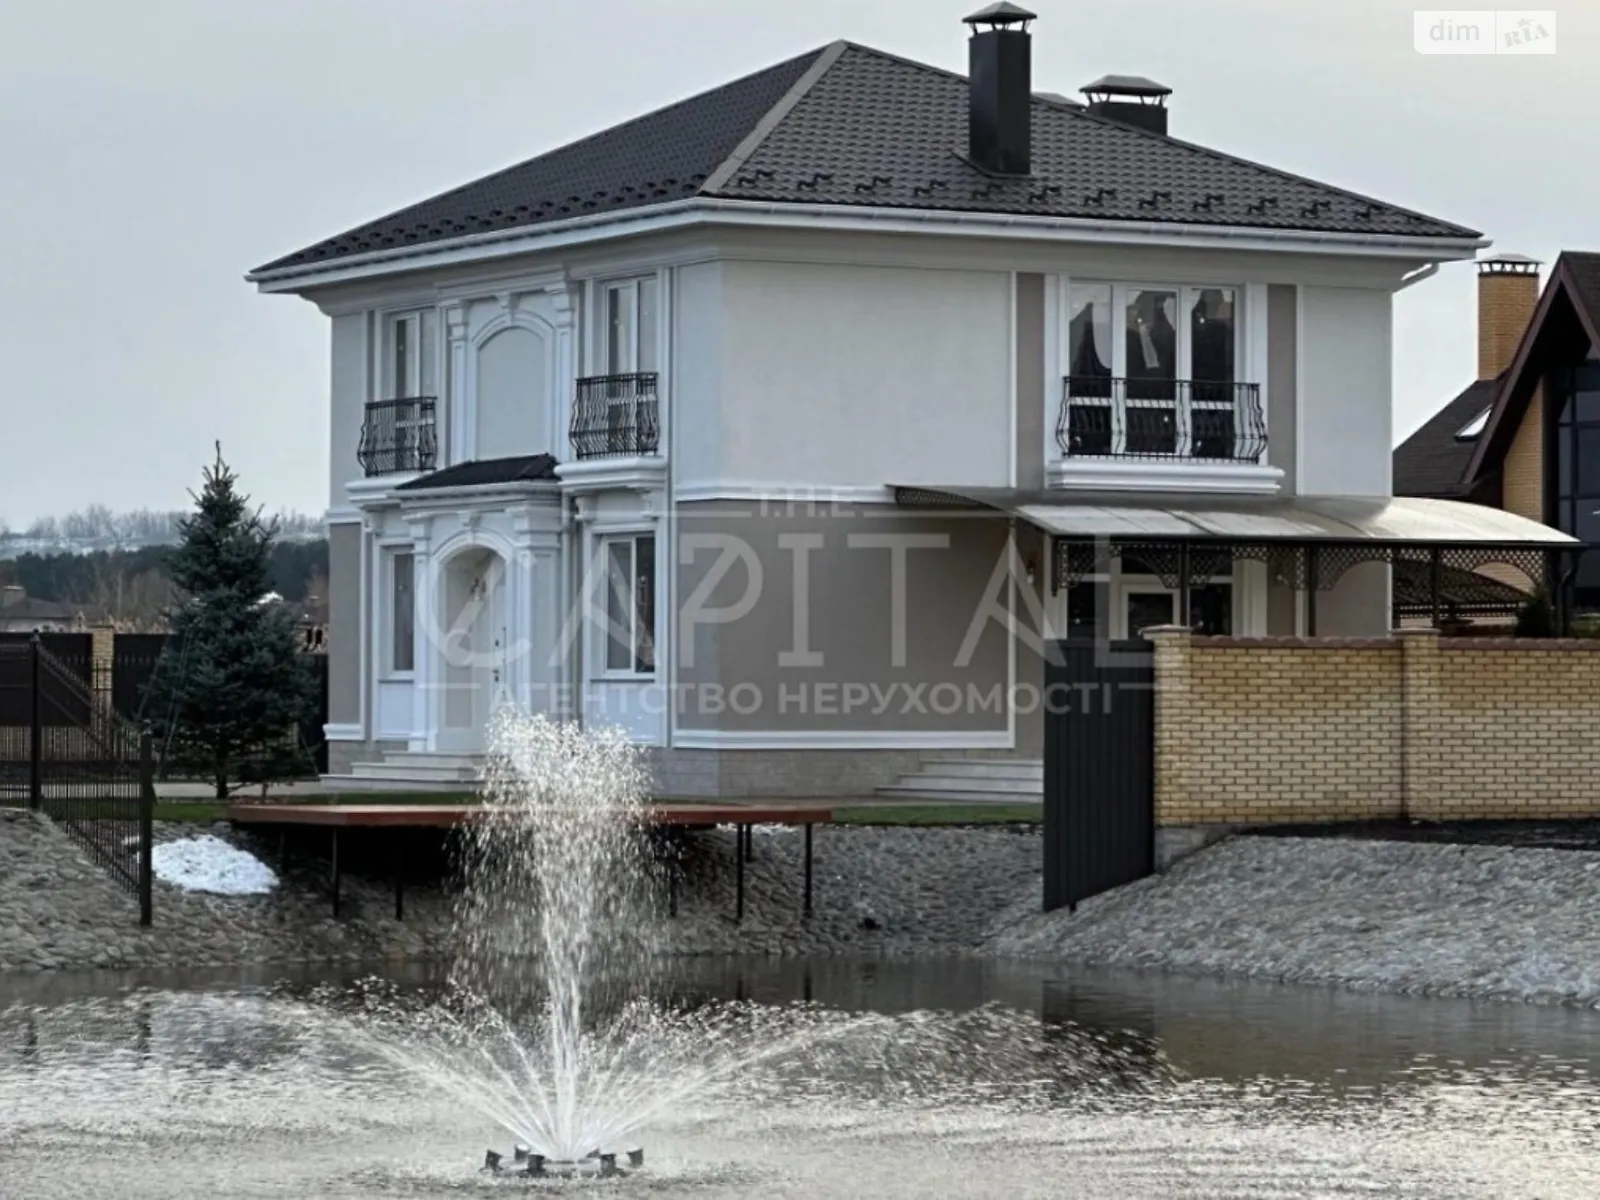 Продается дом на 2 этажа 165 кв. м с террасой, Романків - фото 1